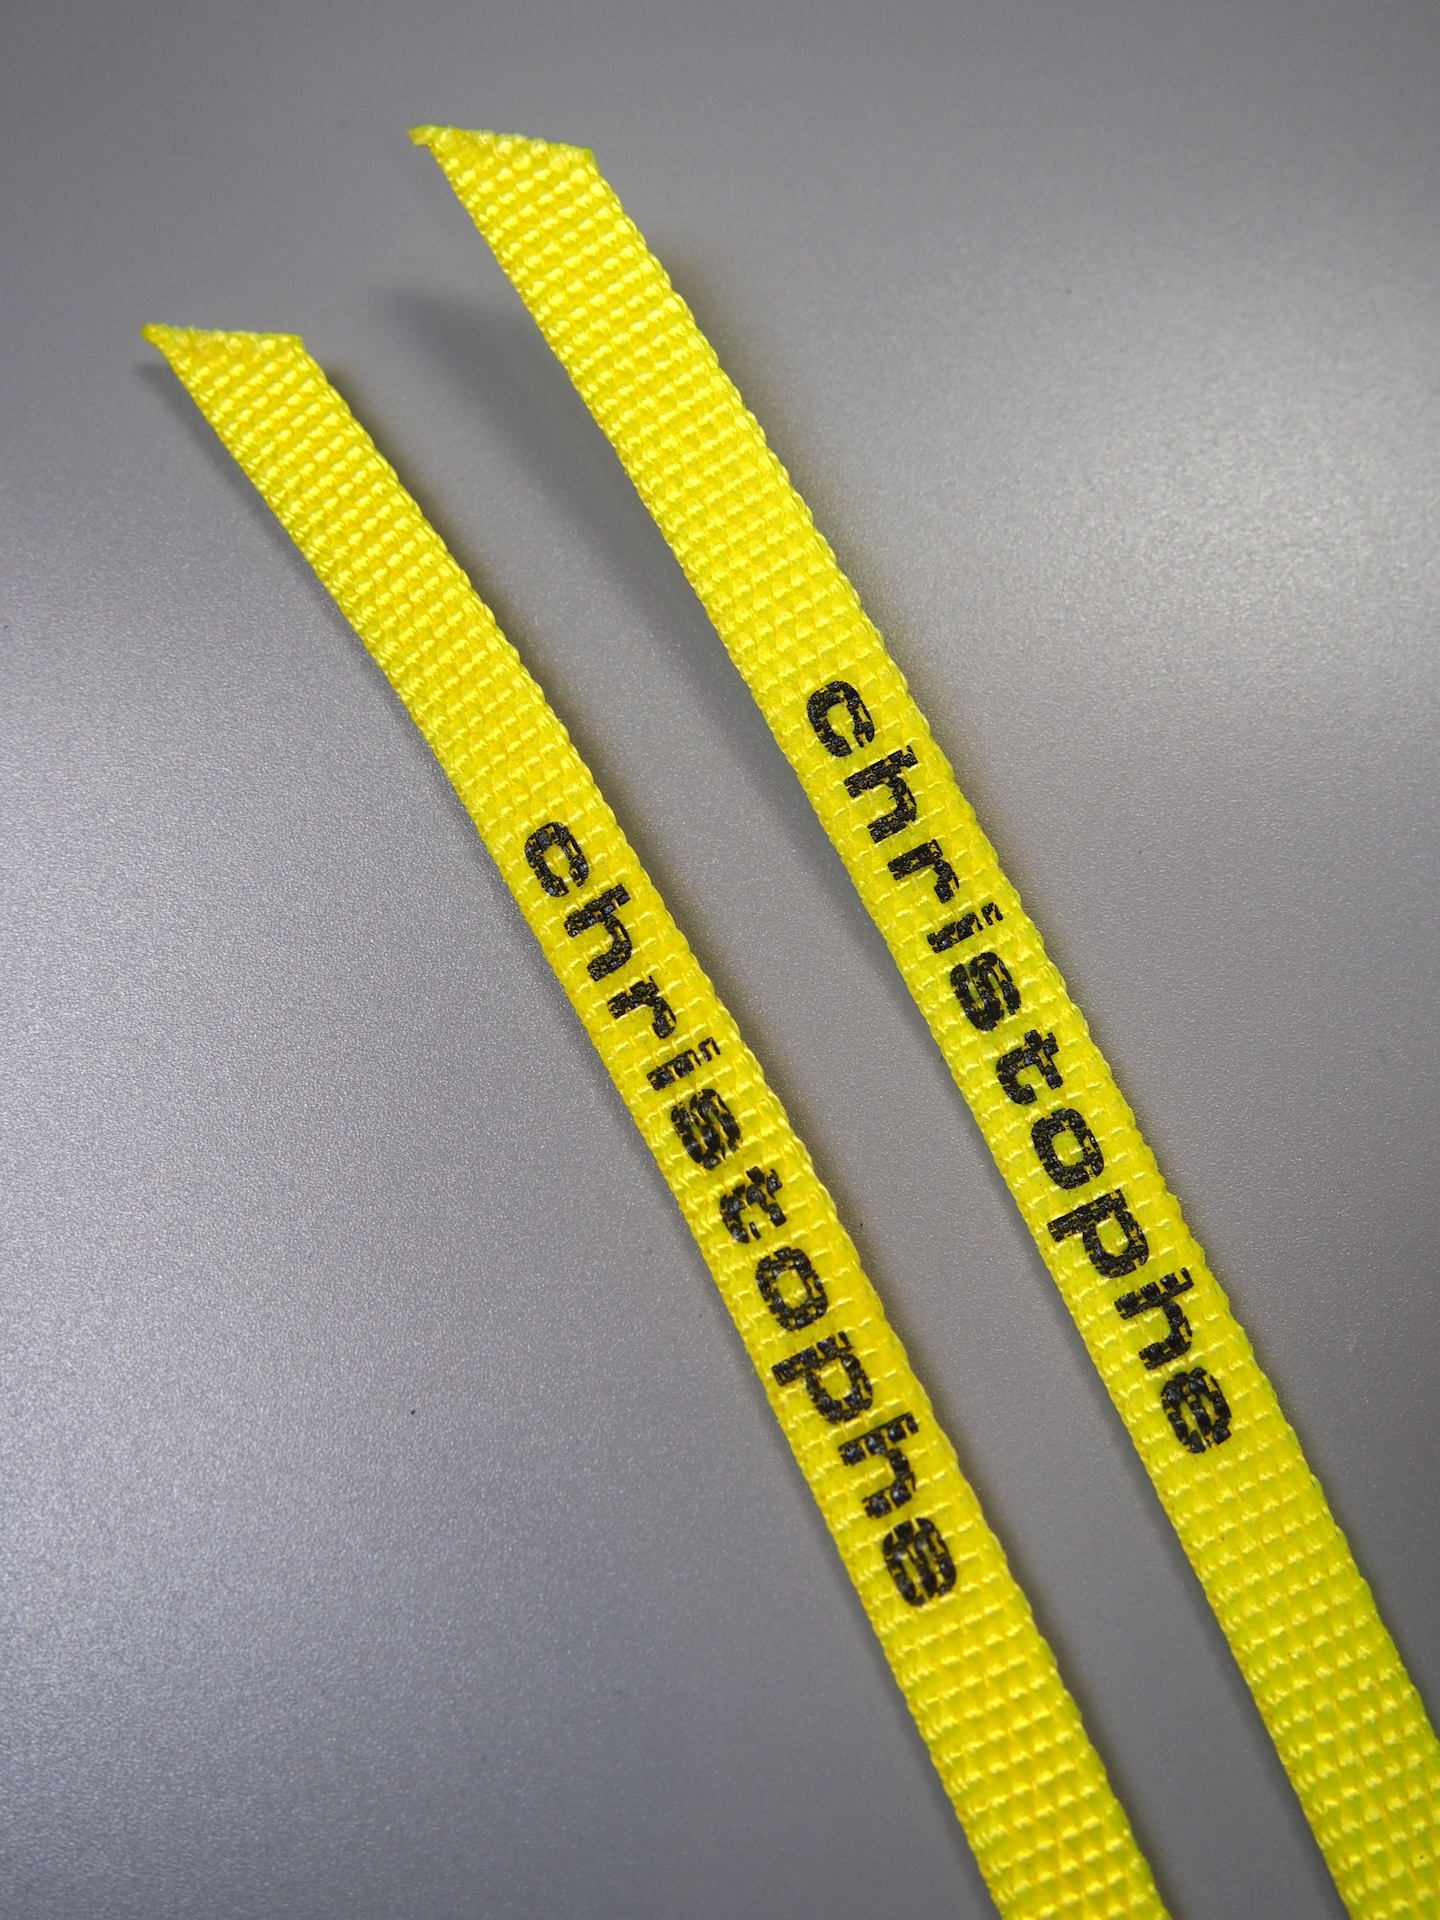 Mt. Christophe nylon toe straps – Neon yellow